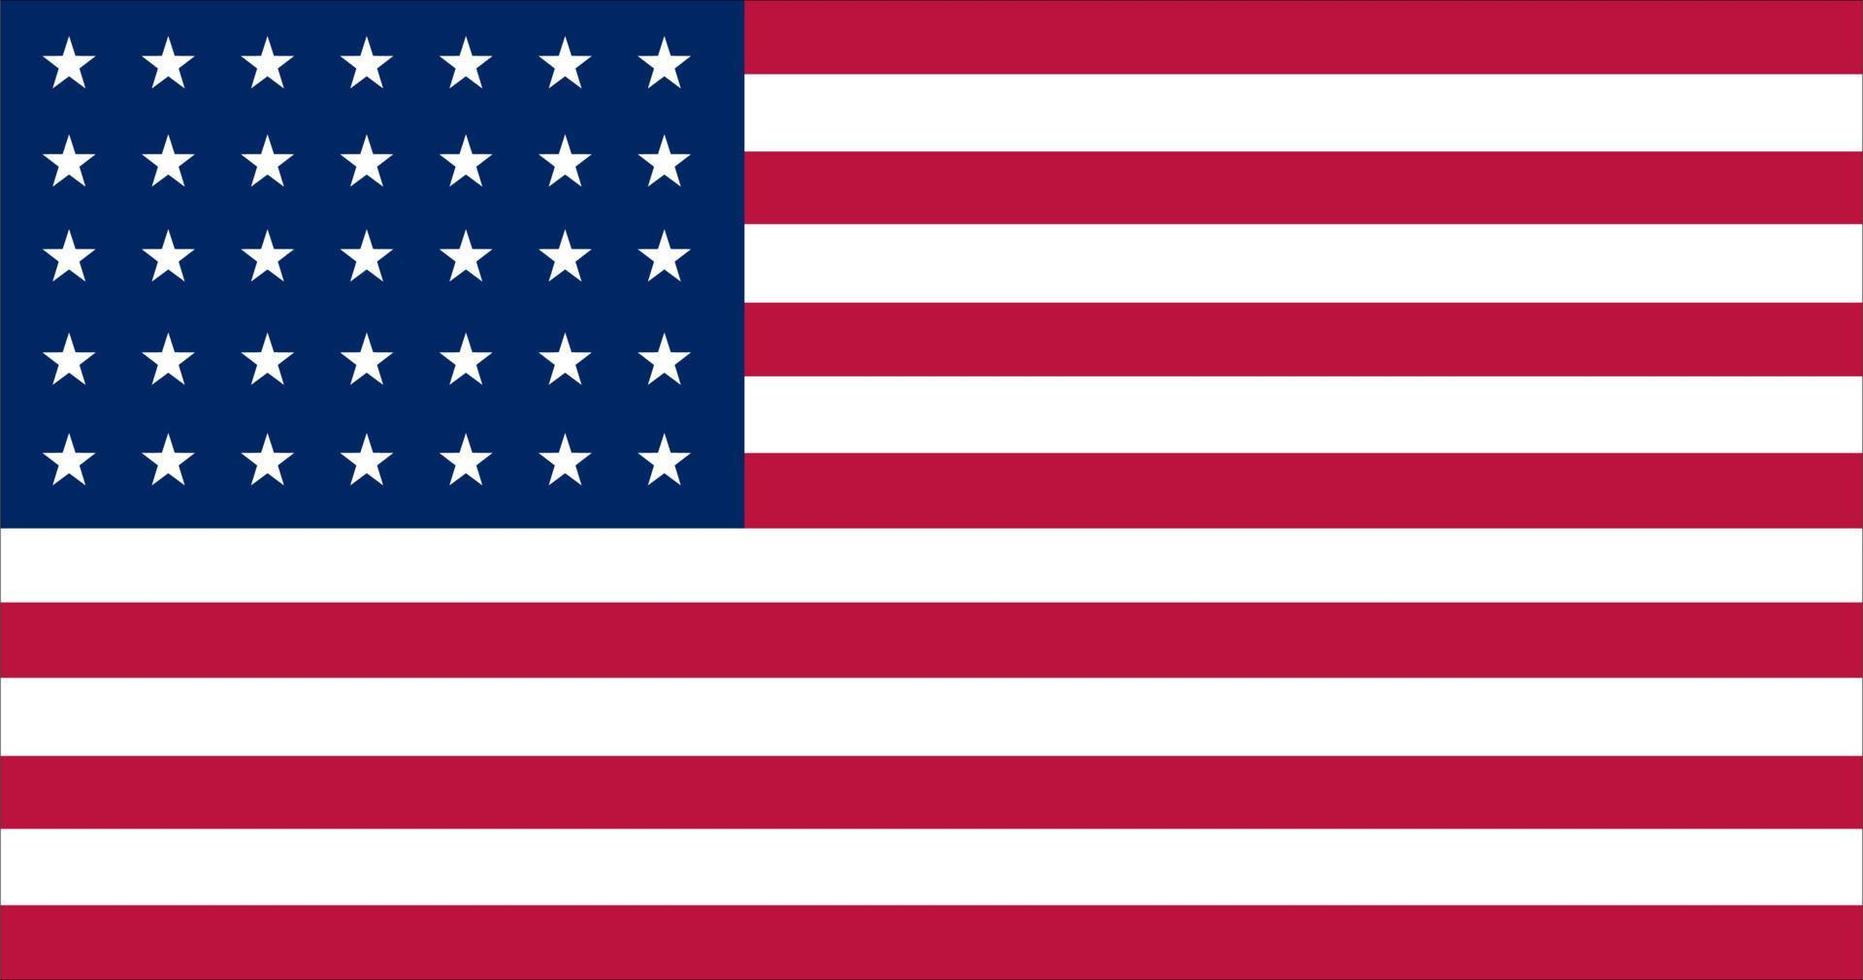 United States flag, US flag, America flag vector illustration